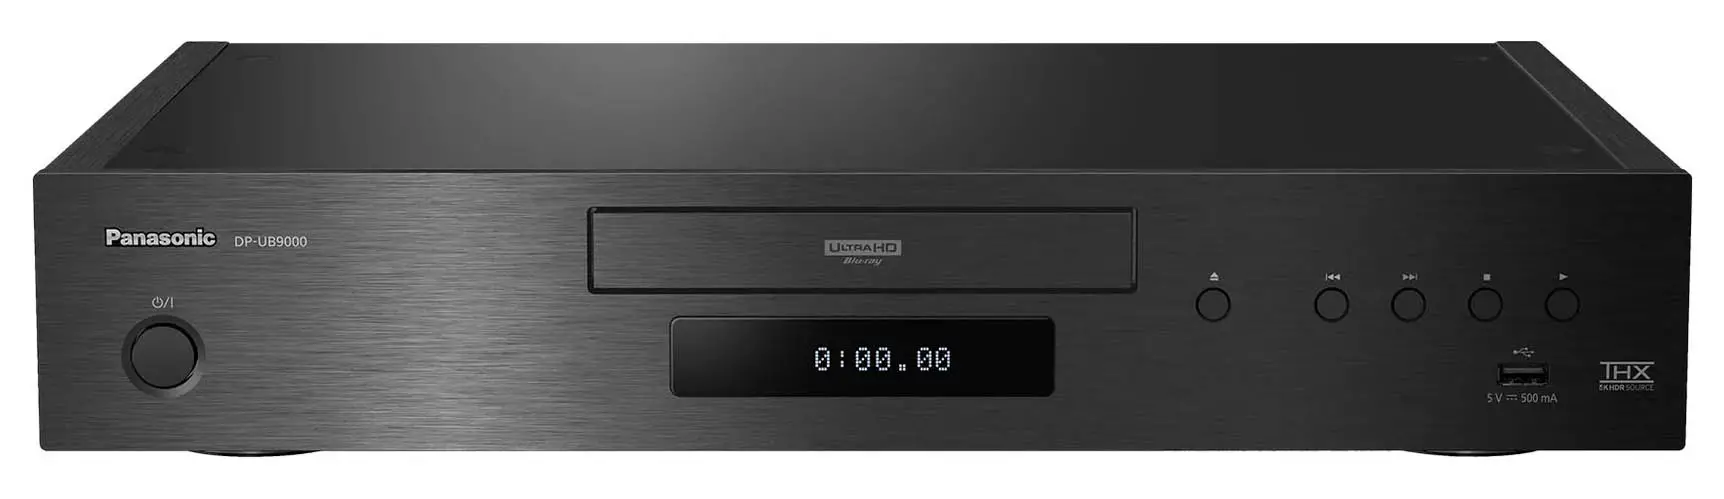 Panasonic DP-UB9000 4k Blu-ray Player (2019)